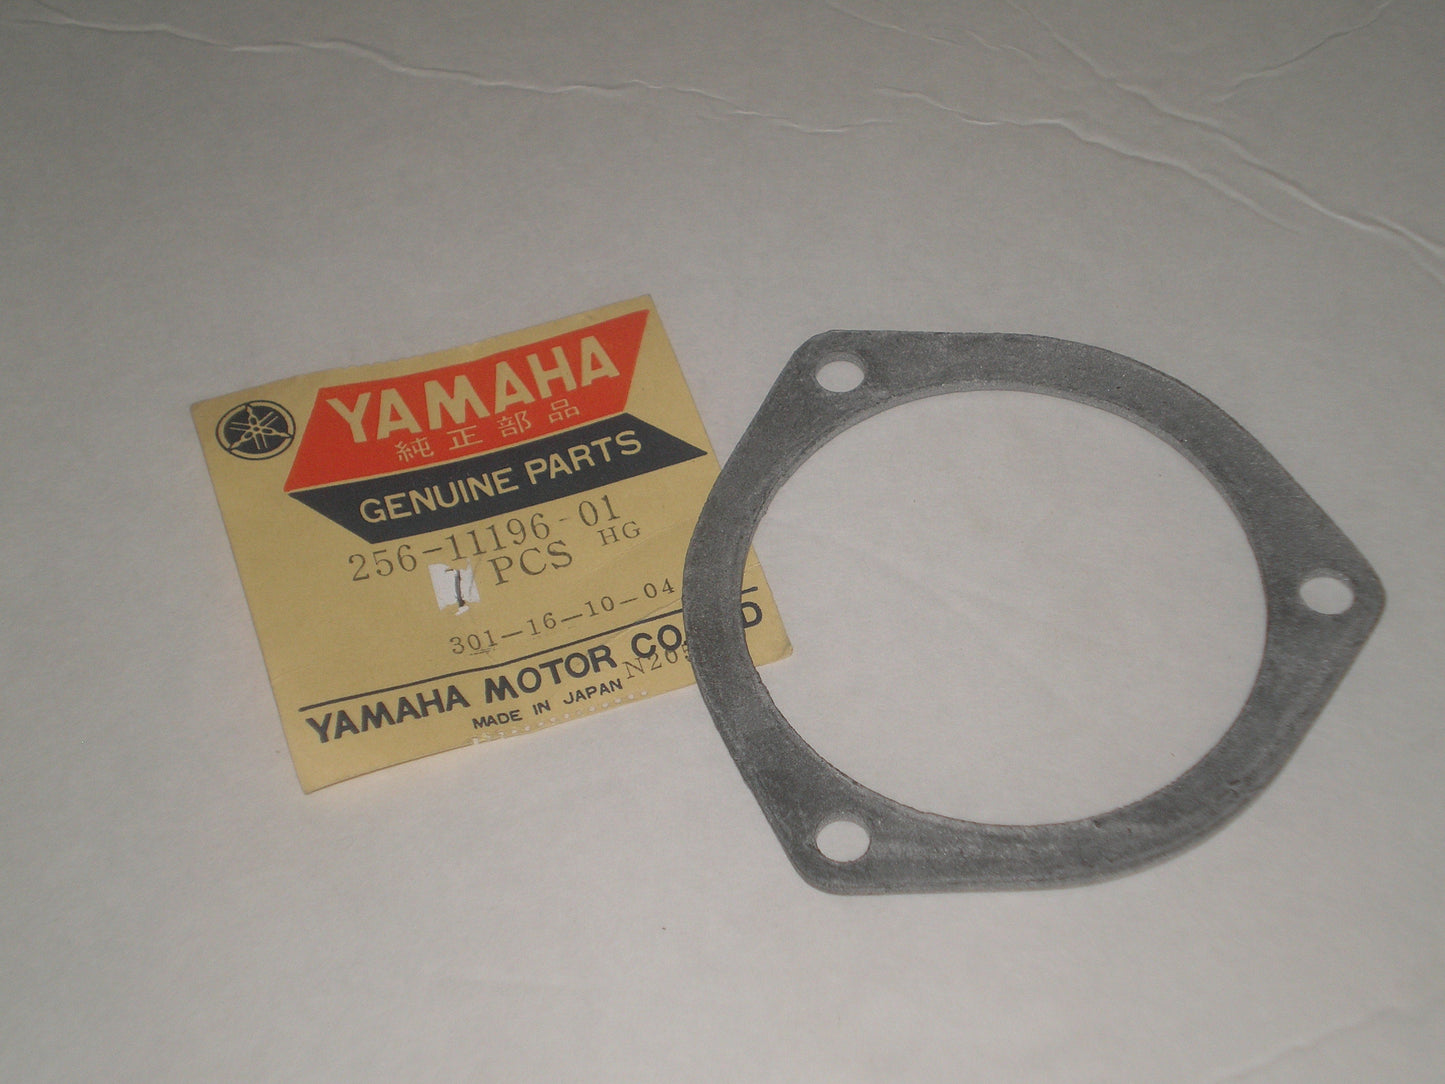 YAMAHA TX650 XS1 XS2 XS650 Cylinder Head Cover Gasket 256-11196-09